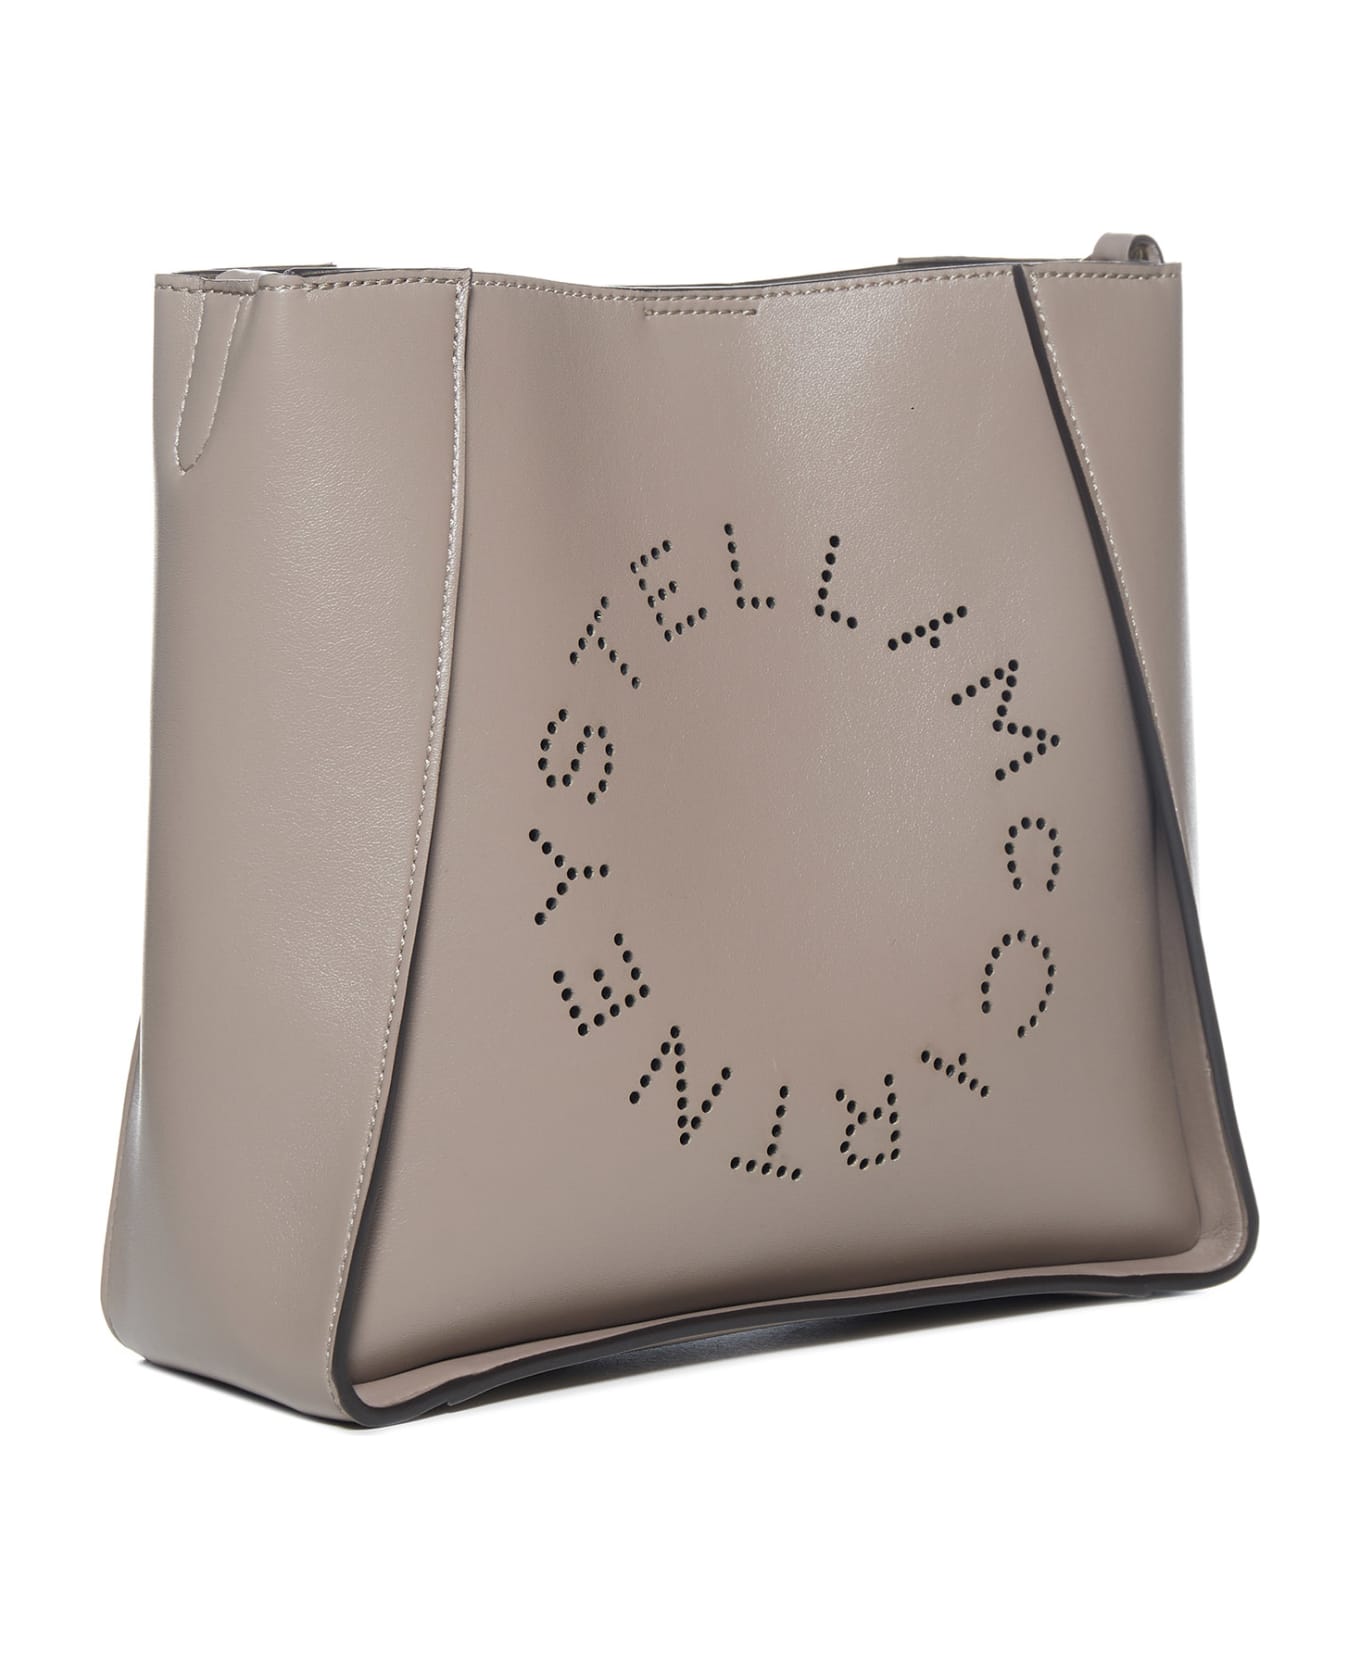 Stella McCartney Crossbody Bag With Perforated Stella Logo - Moss トートバッグ